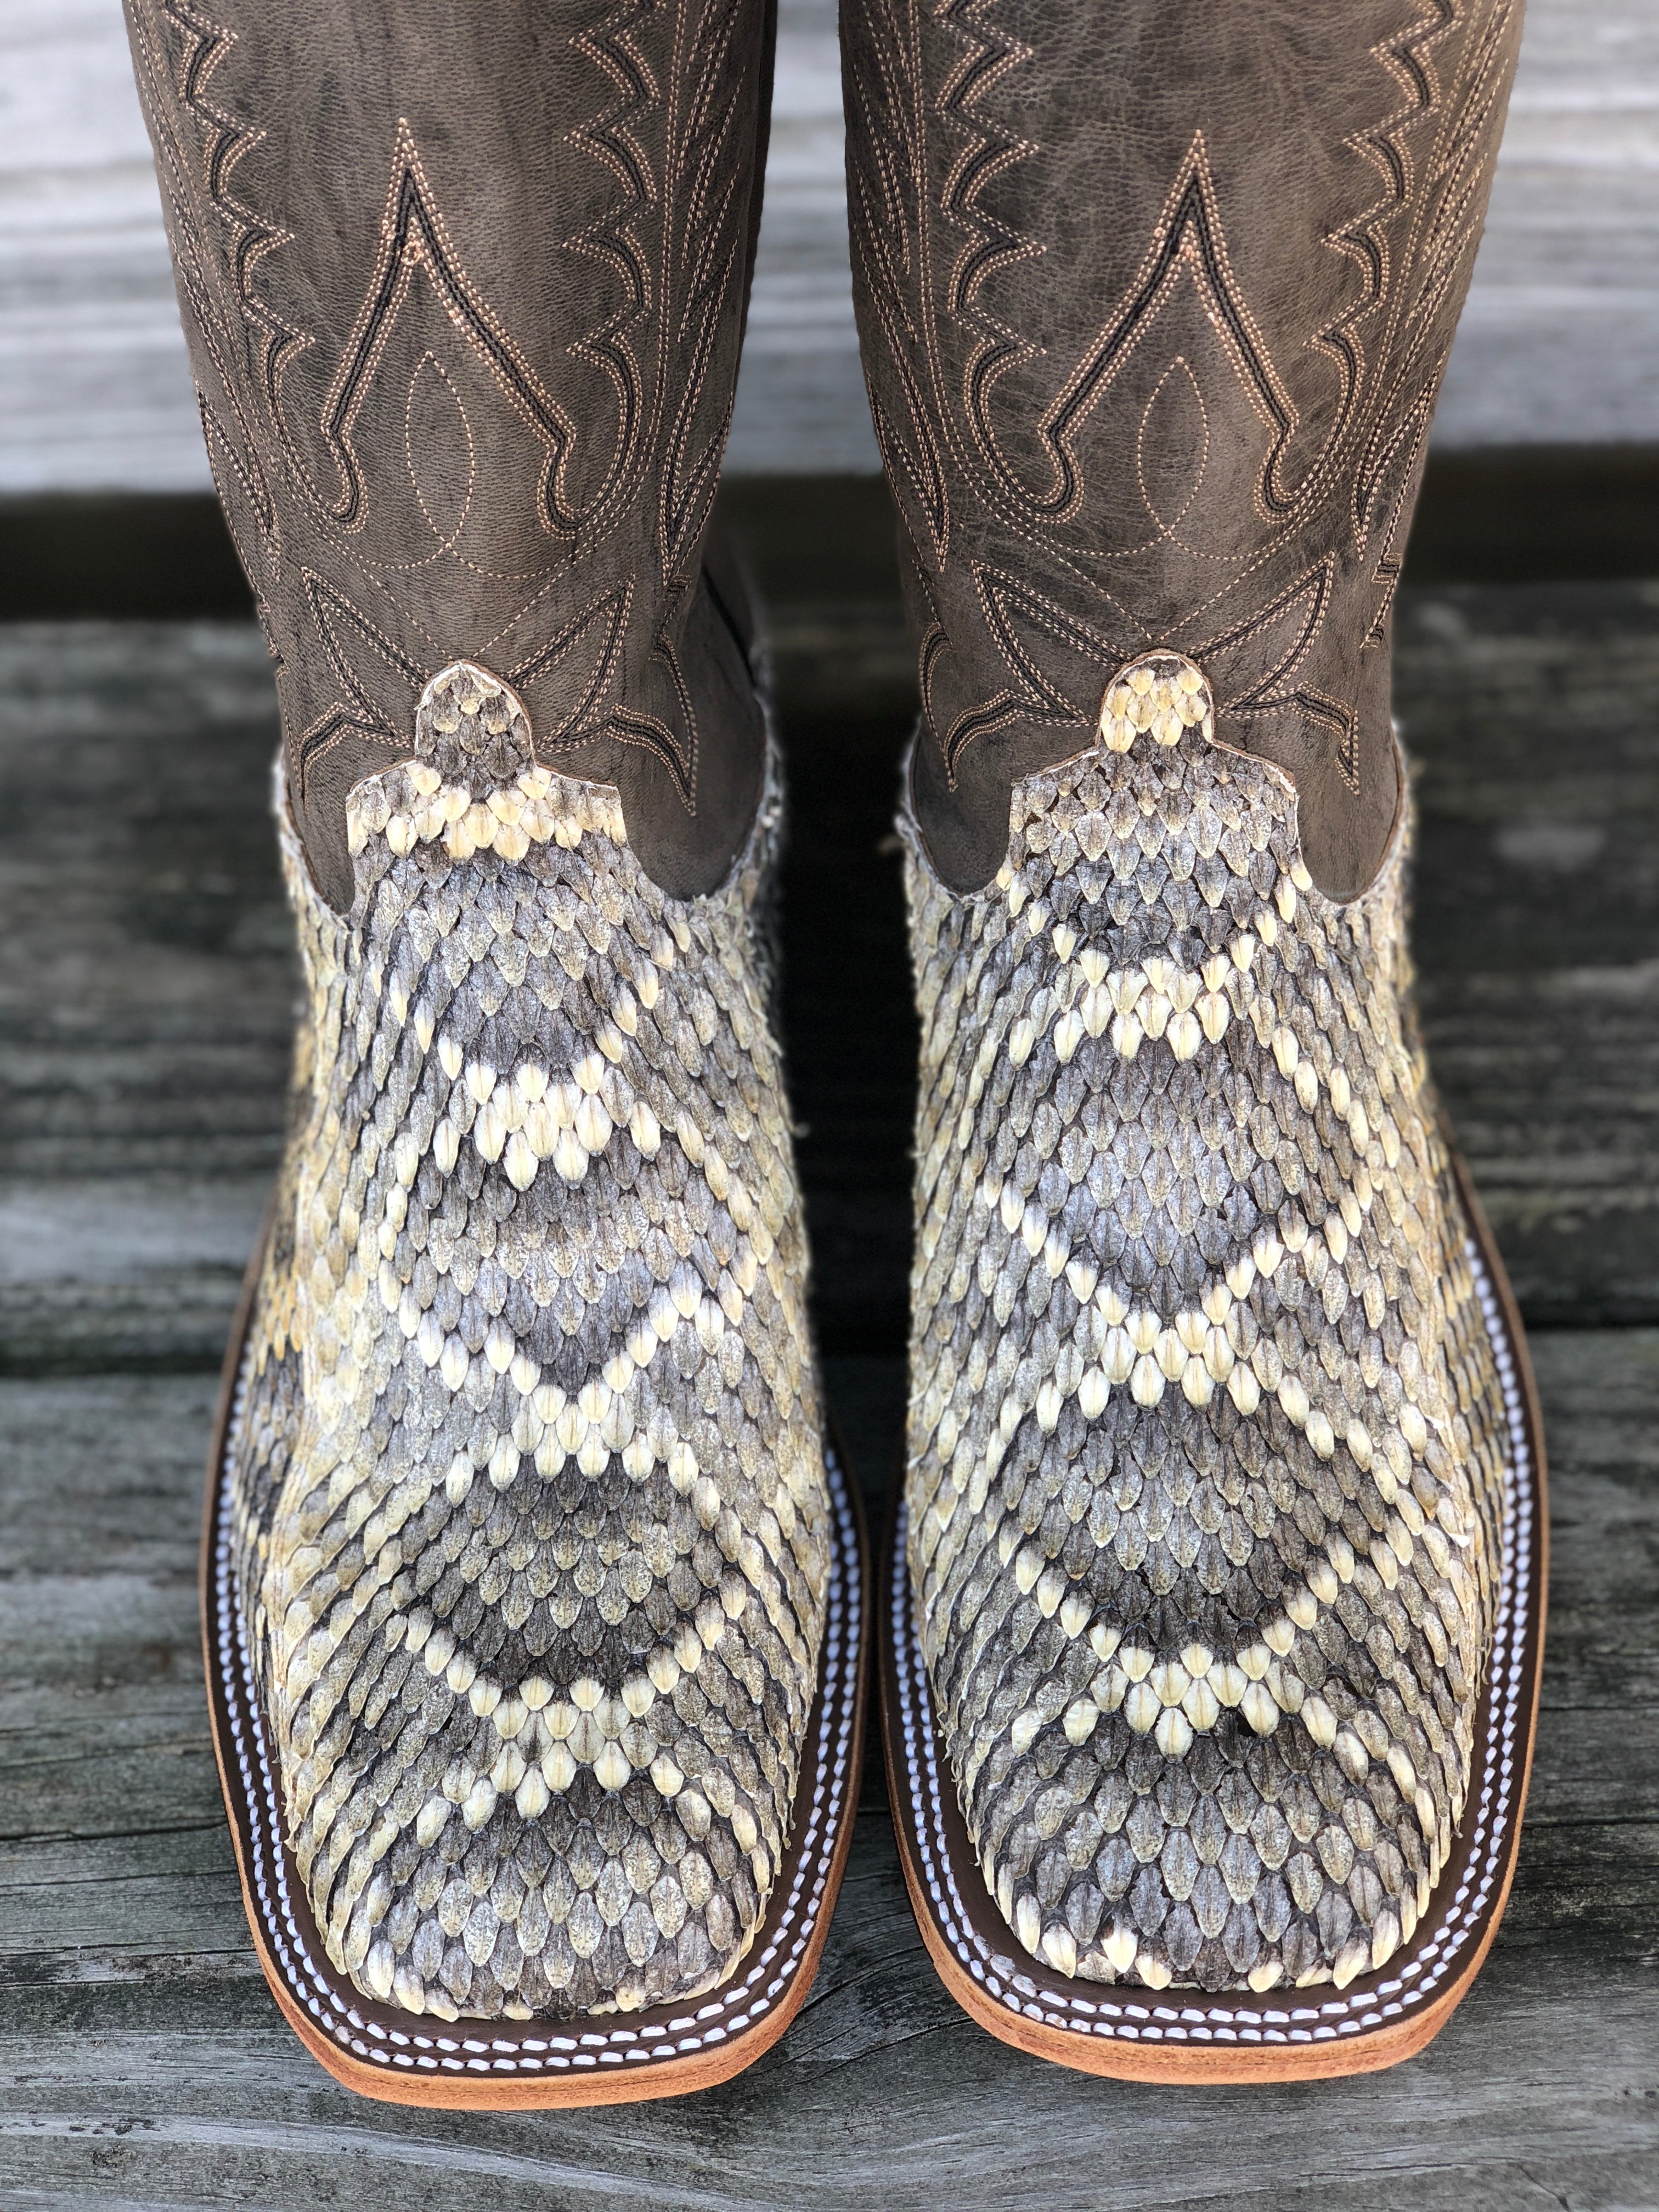 diamondback snake boots